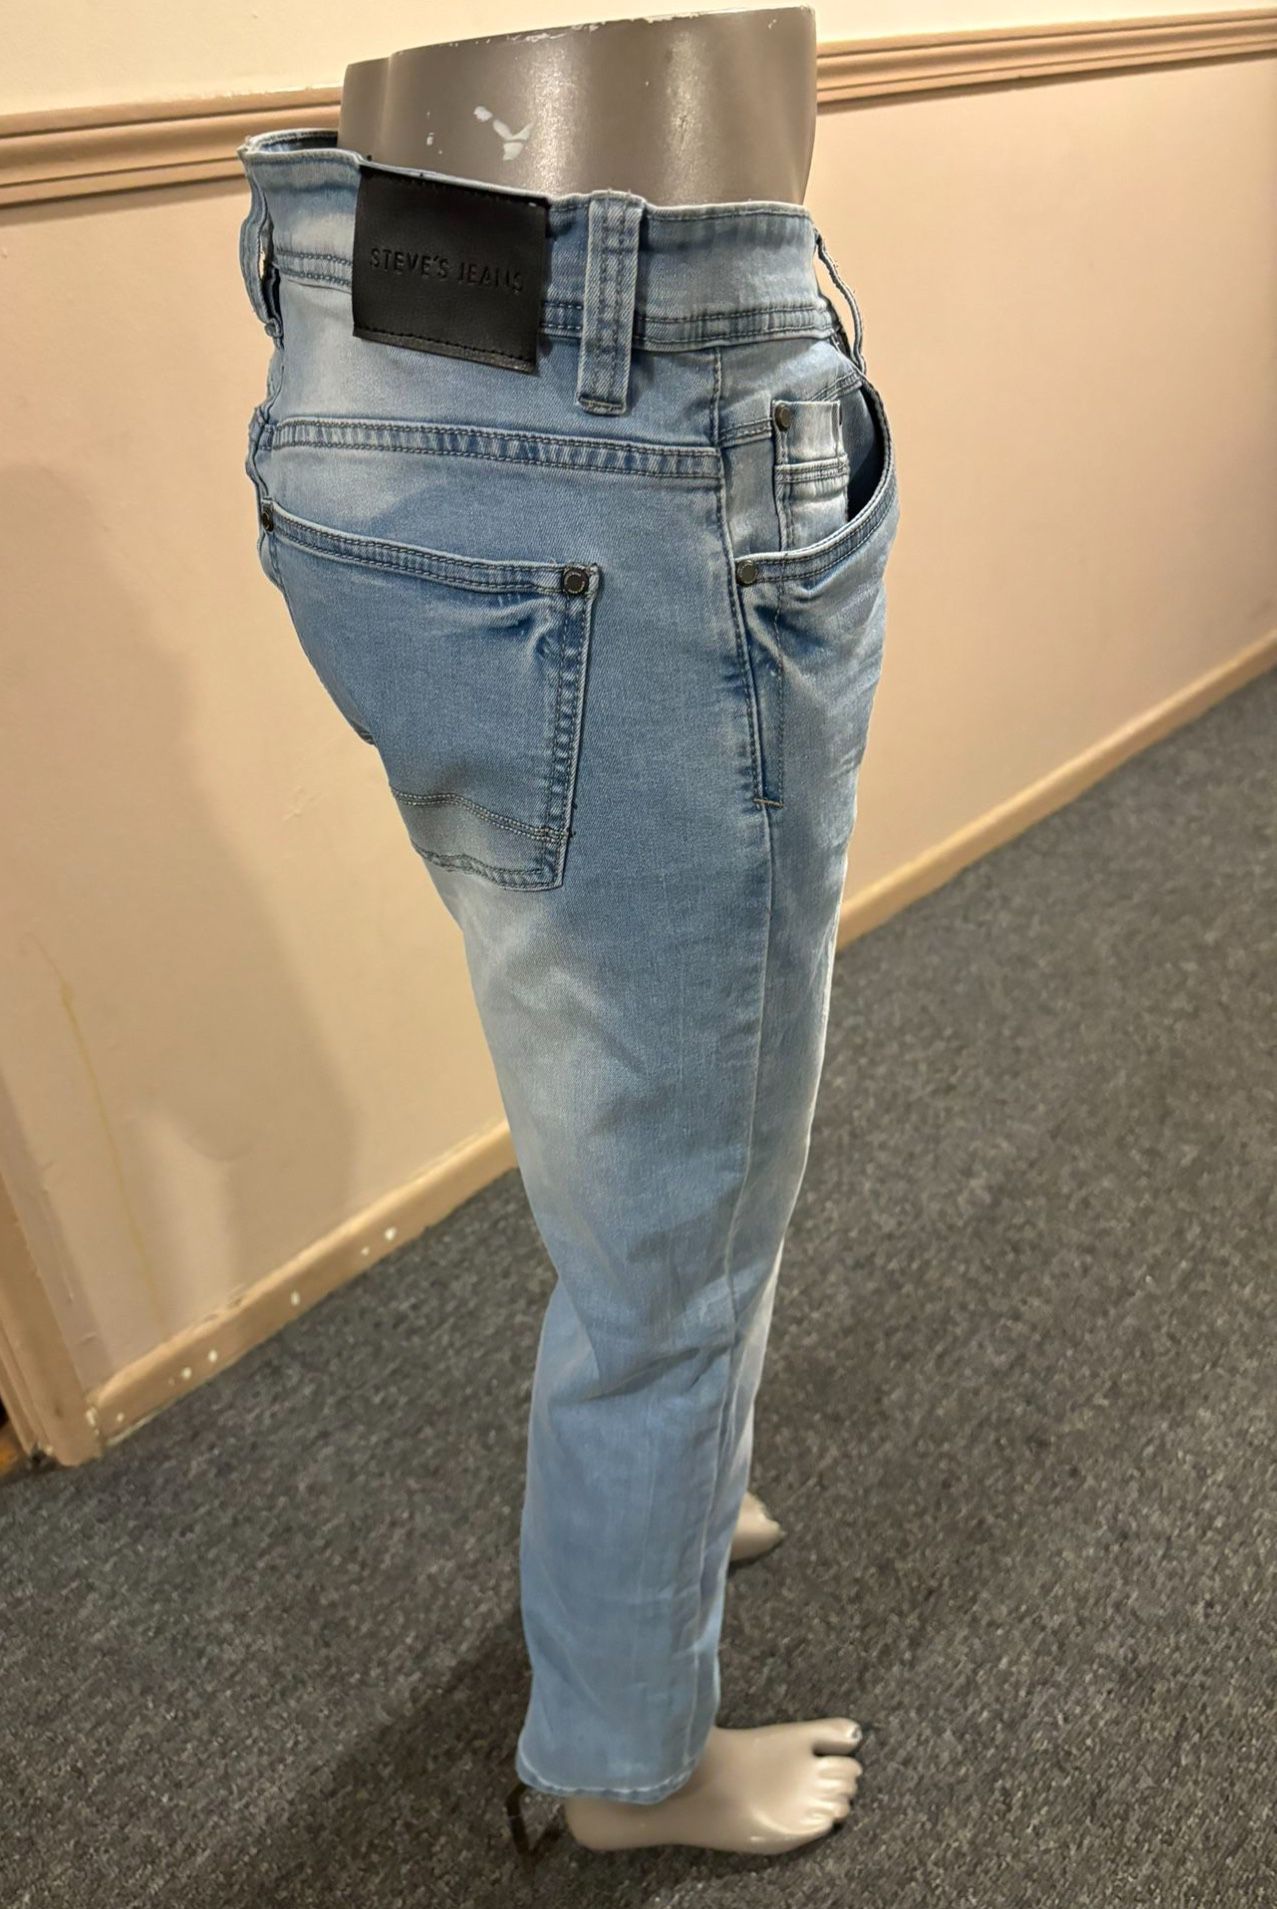 Steve’s Jeans - Men Size 29/30